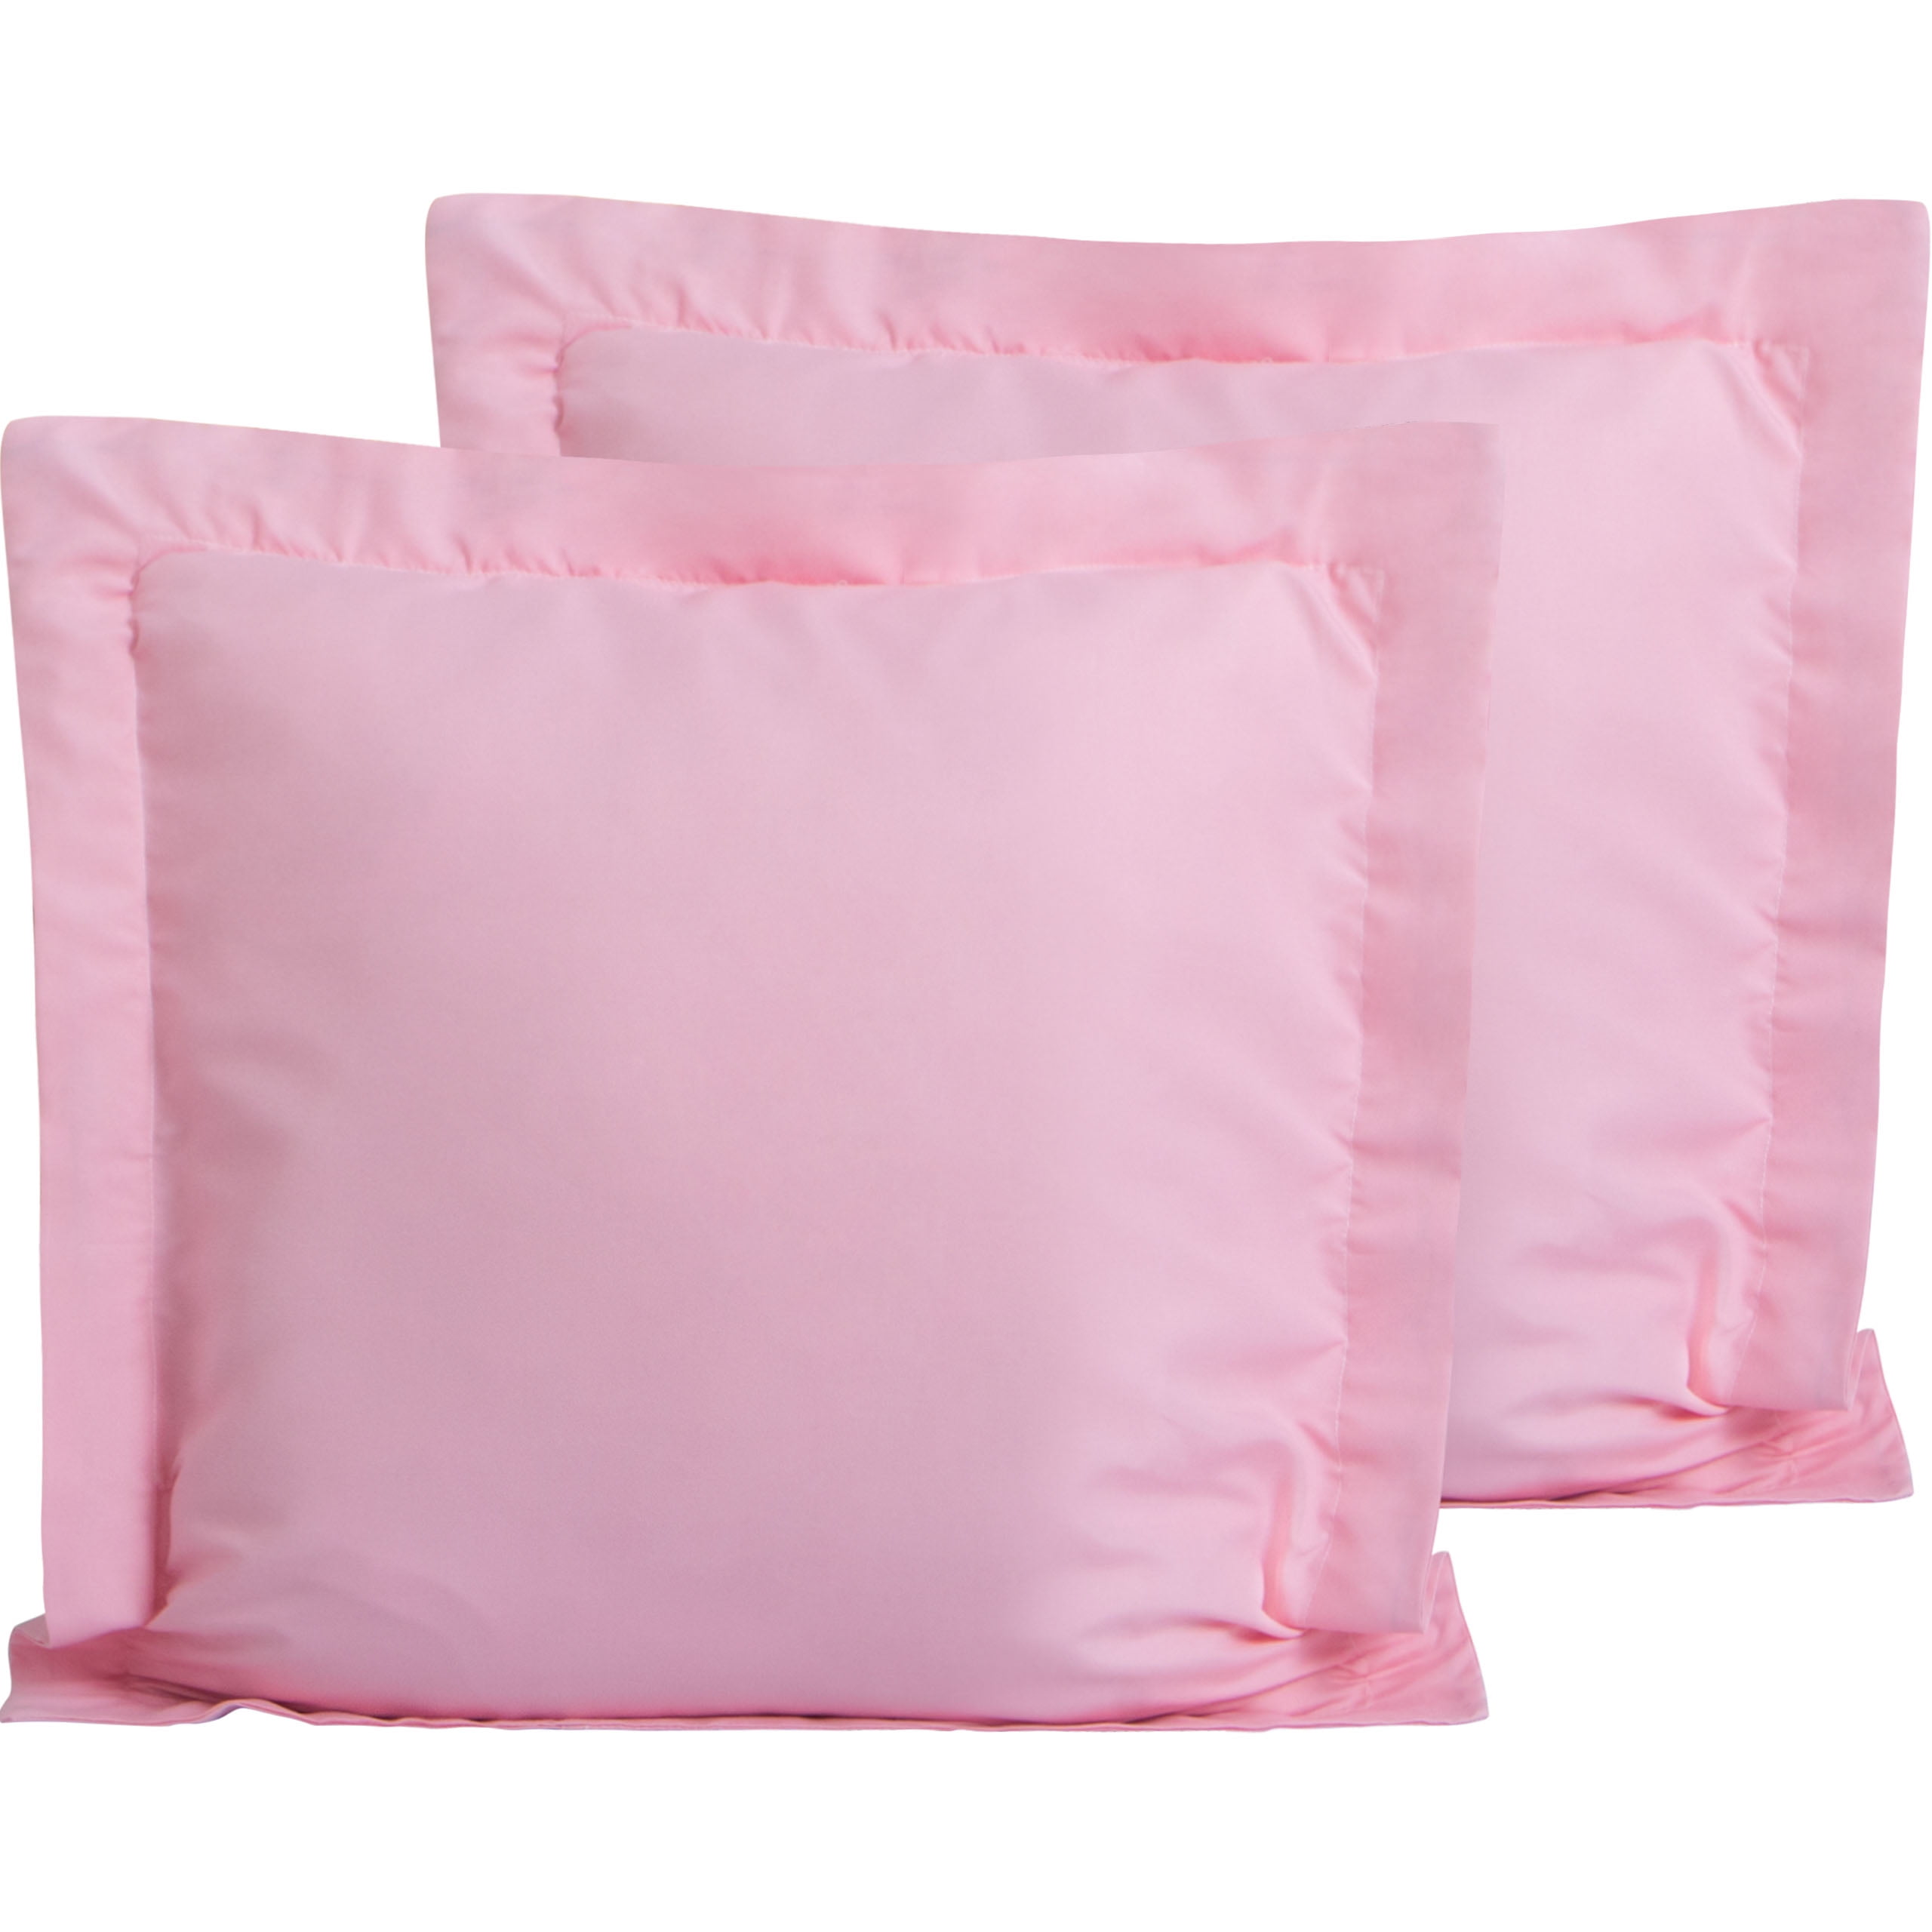 26 x 26 Khaki, Euro FLXXIE 2 Pack Microfiber European Pillow Shams Ultra Soft and Premium Quality 